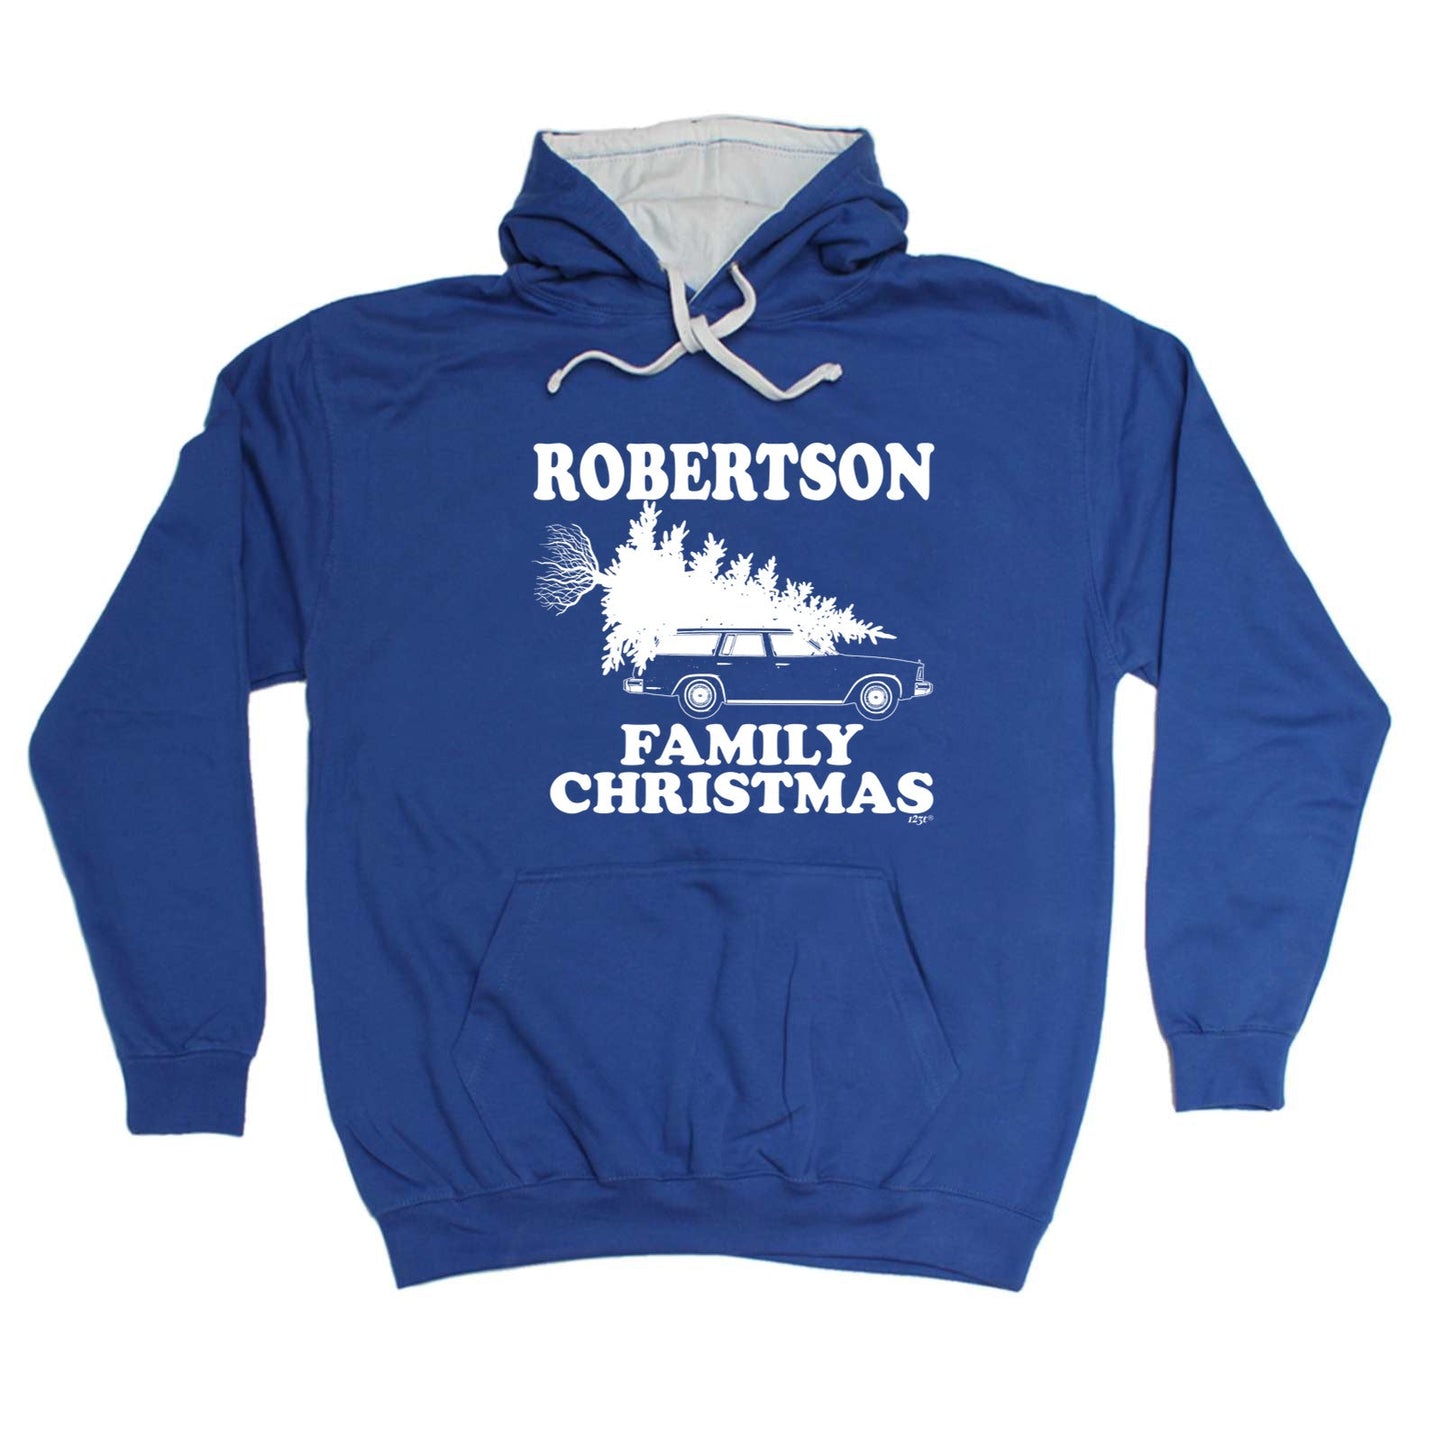 Sailing  Family Christmas Robertson - Xmas Novelty Hoodies Hoodie